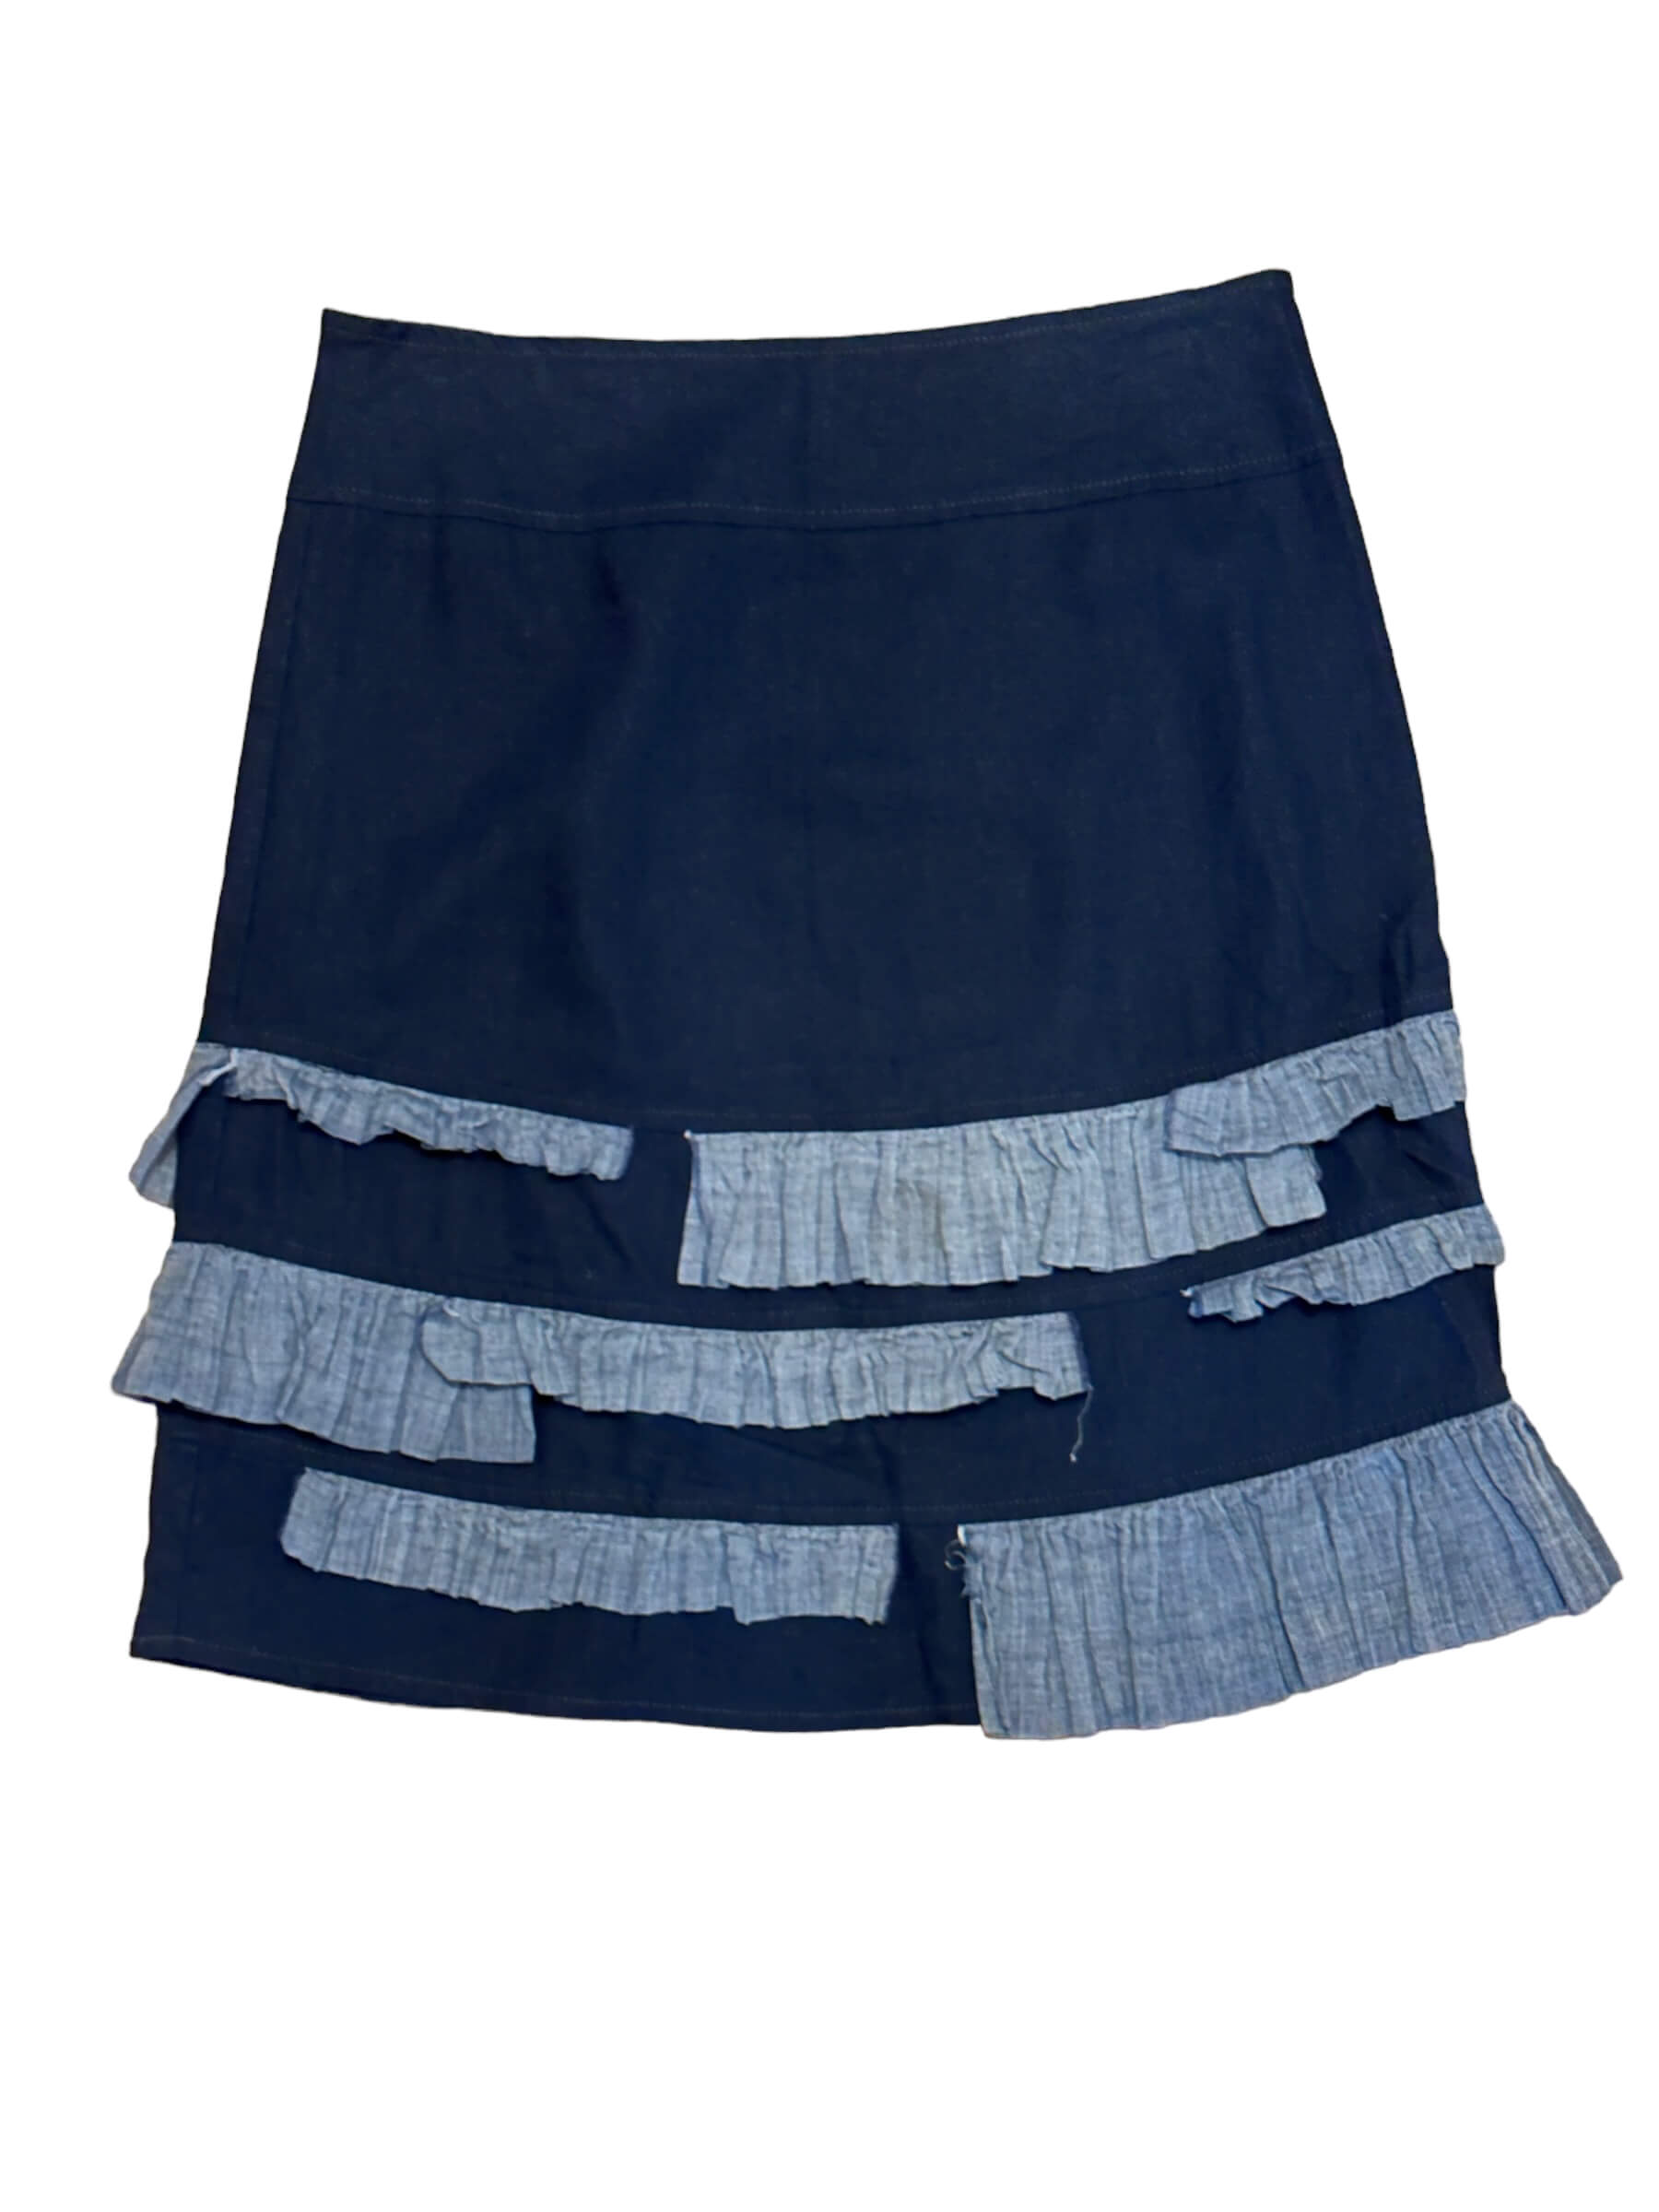 Soft Summer NEESH by DAR for ANTHROPOLOGIE chambray ruffle linen pencil skirt